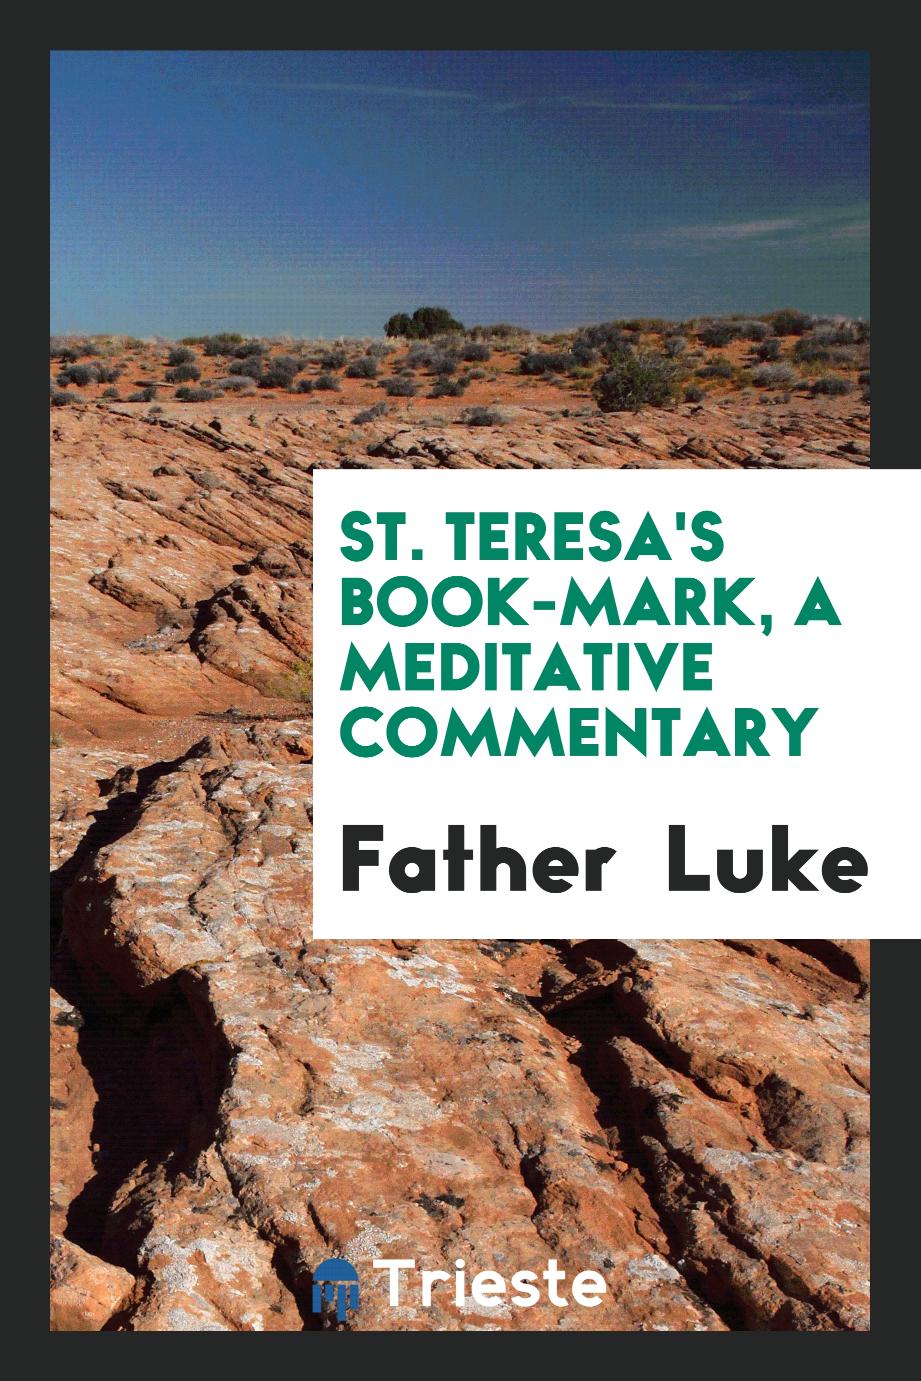 St. Teresa's book-mark, a meditative commentary